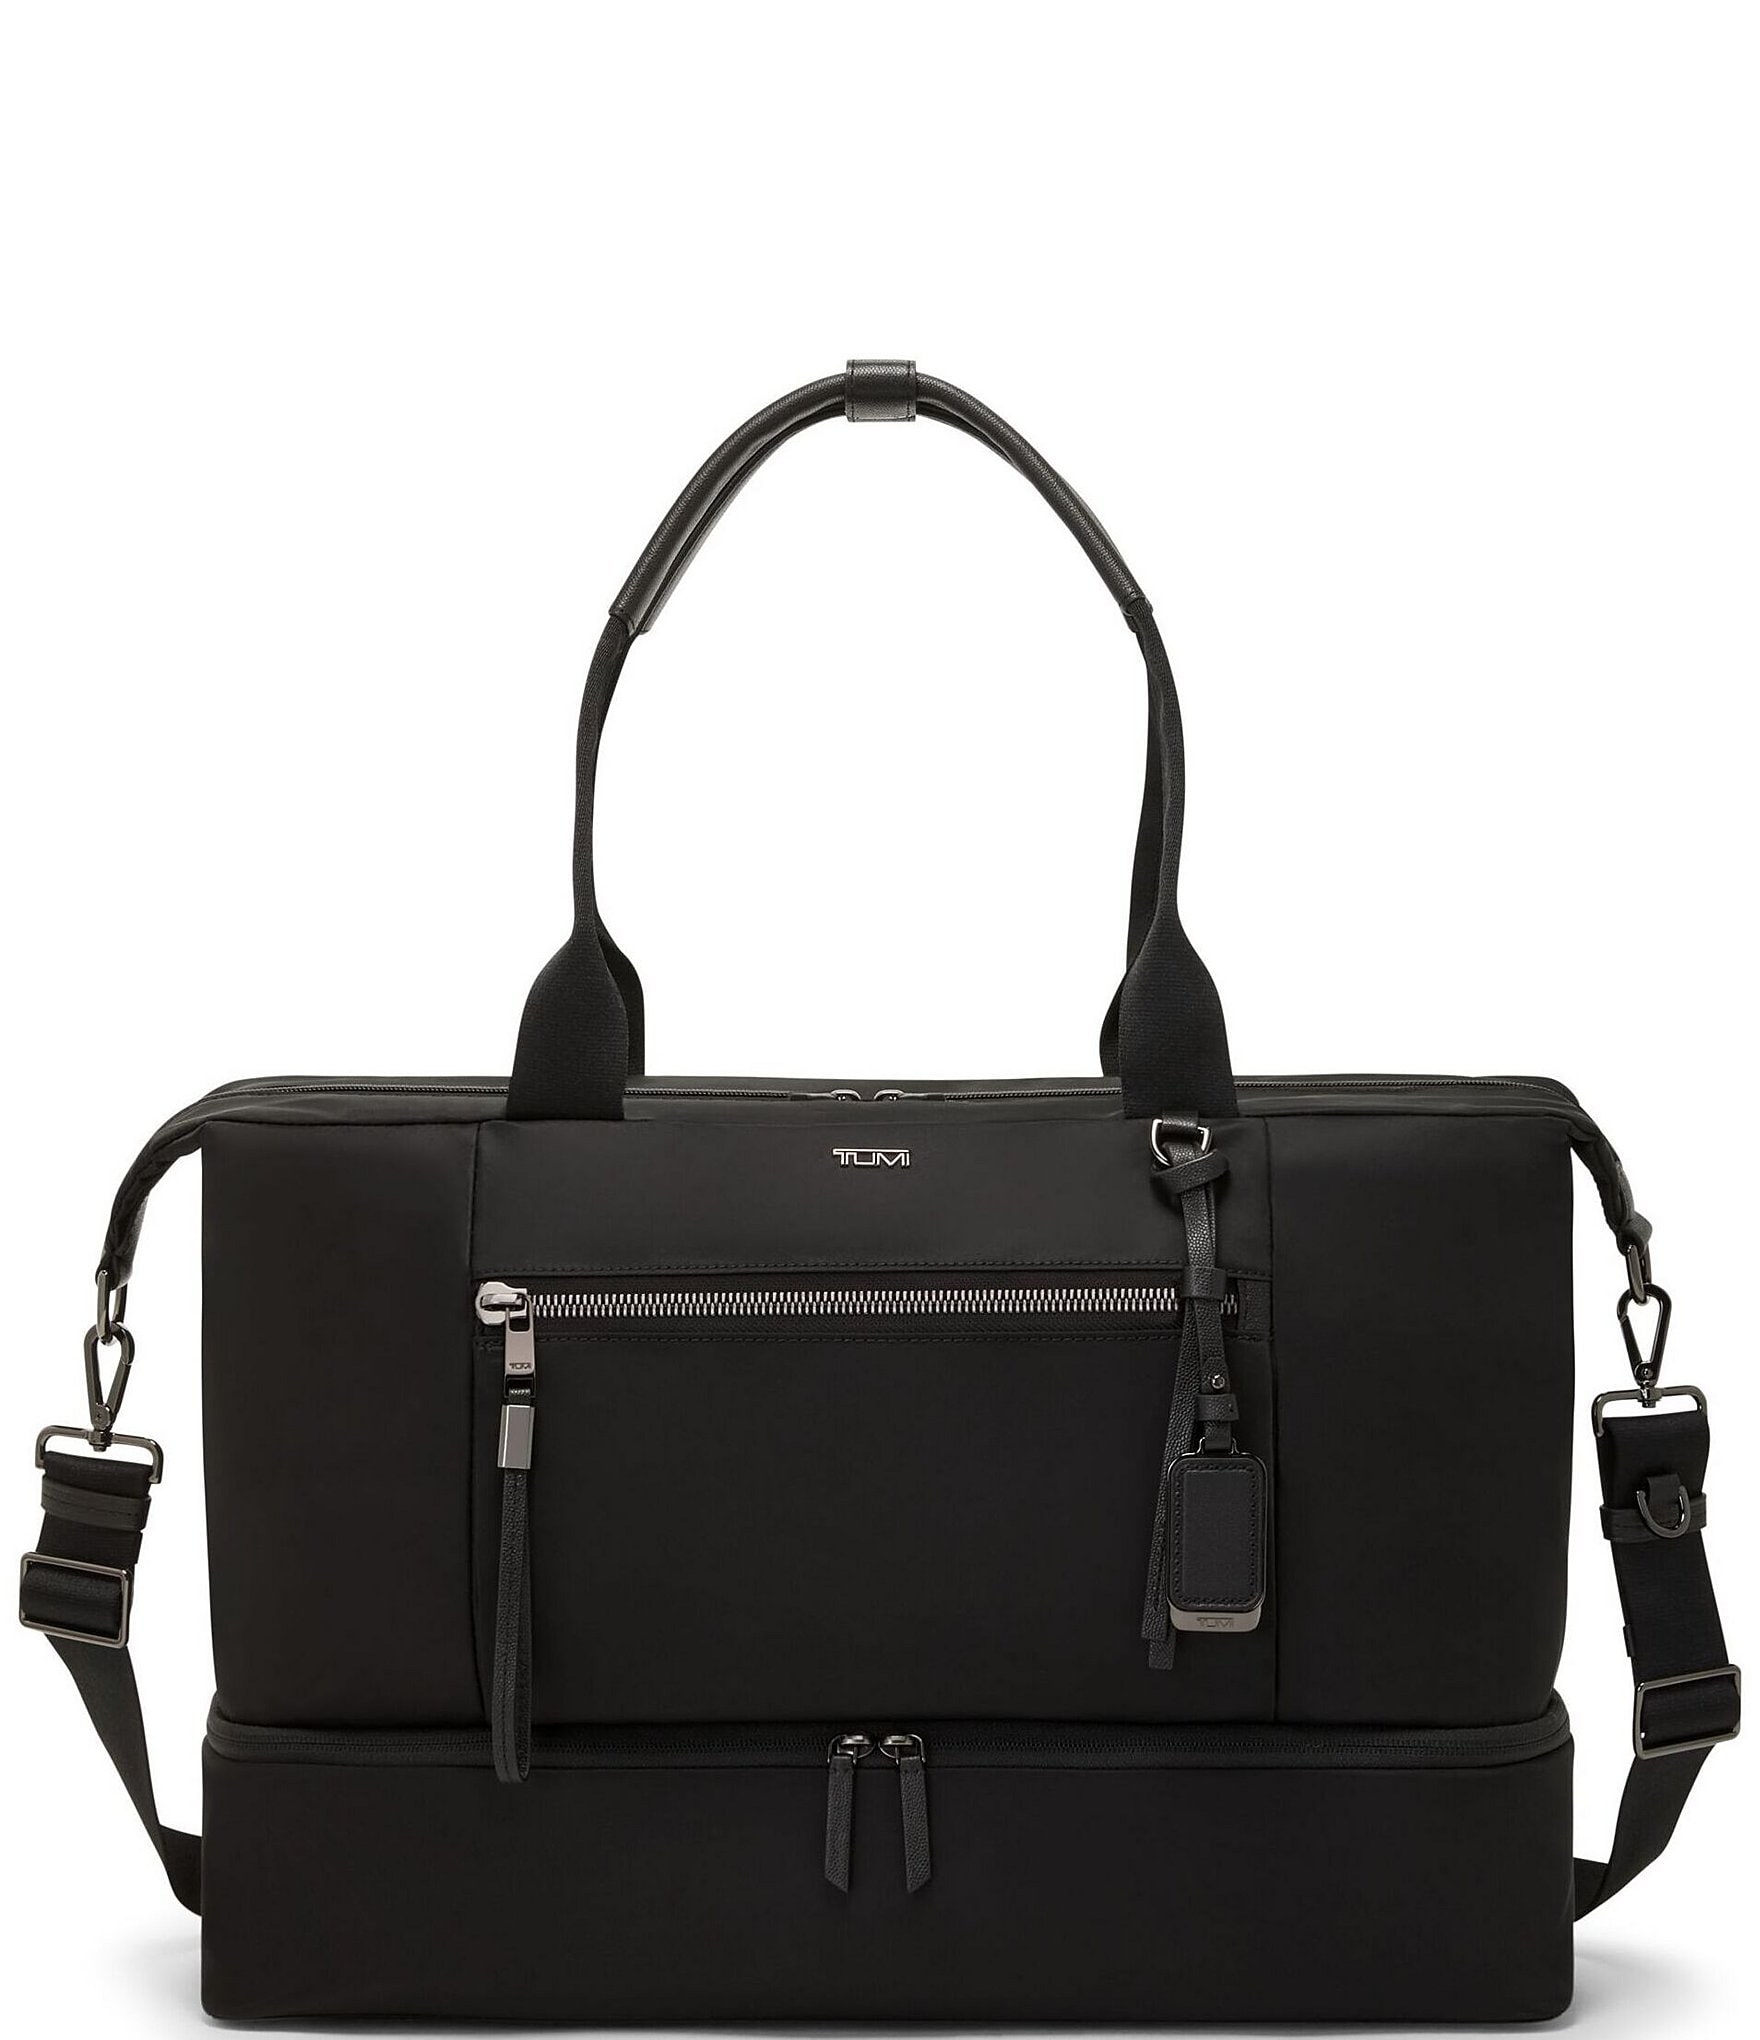 Tumi Bags & Handbags for Women for Sale - eBay